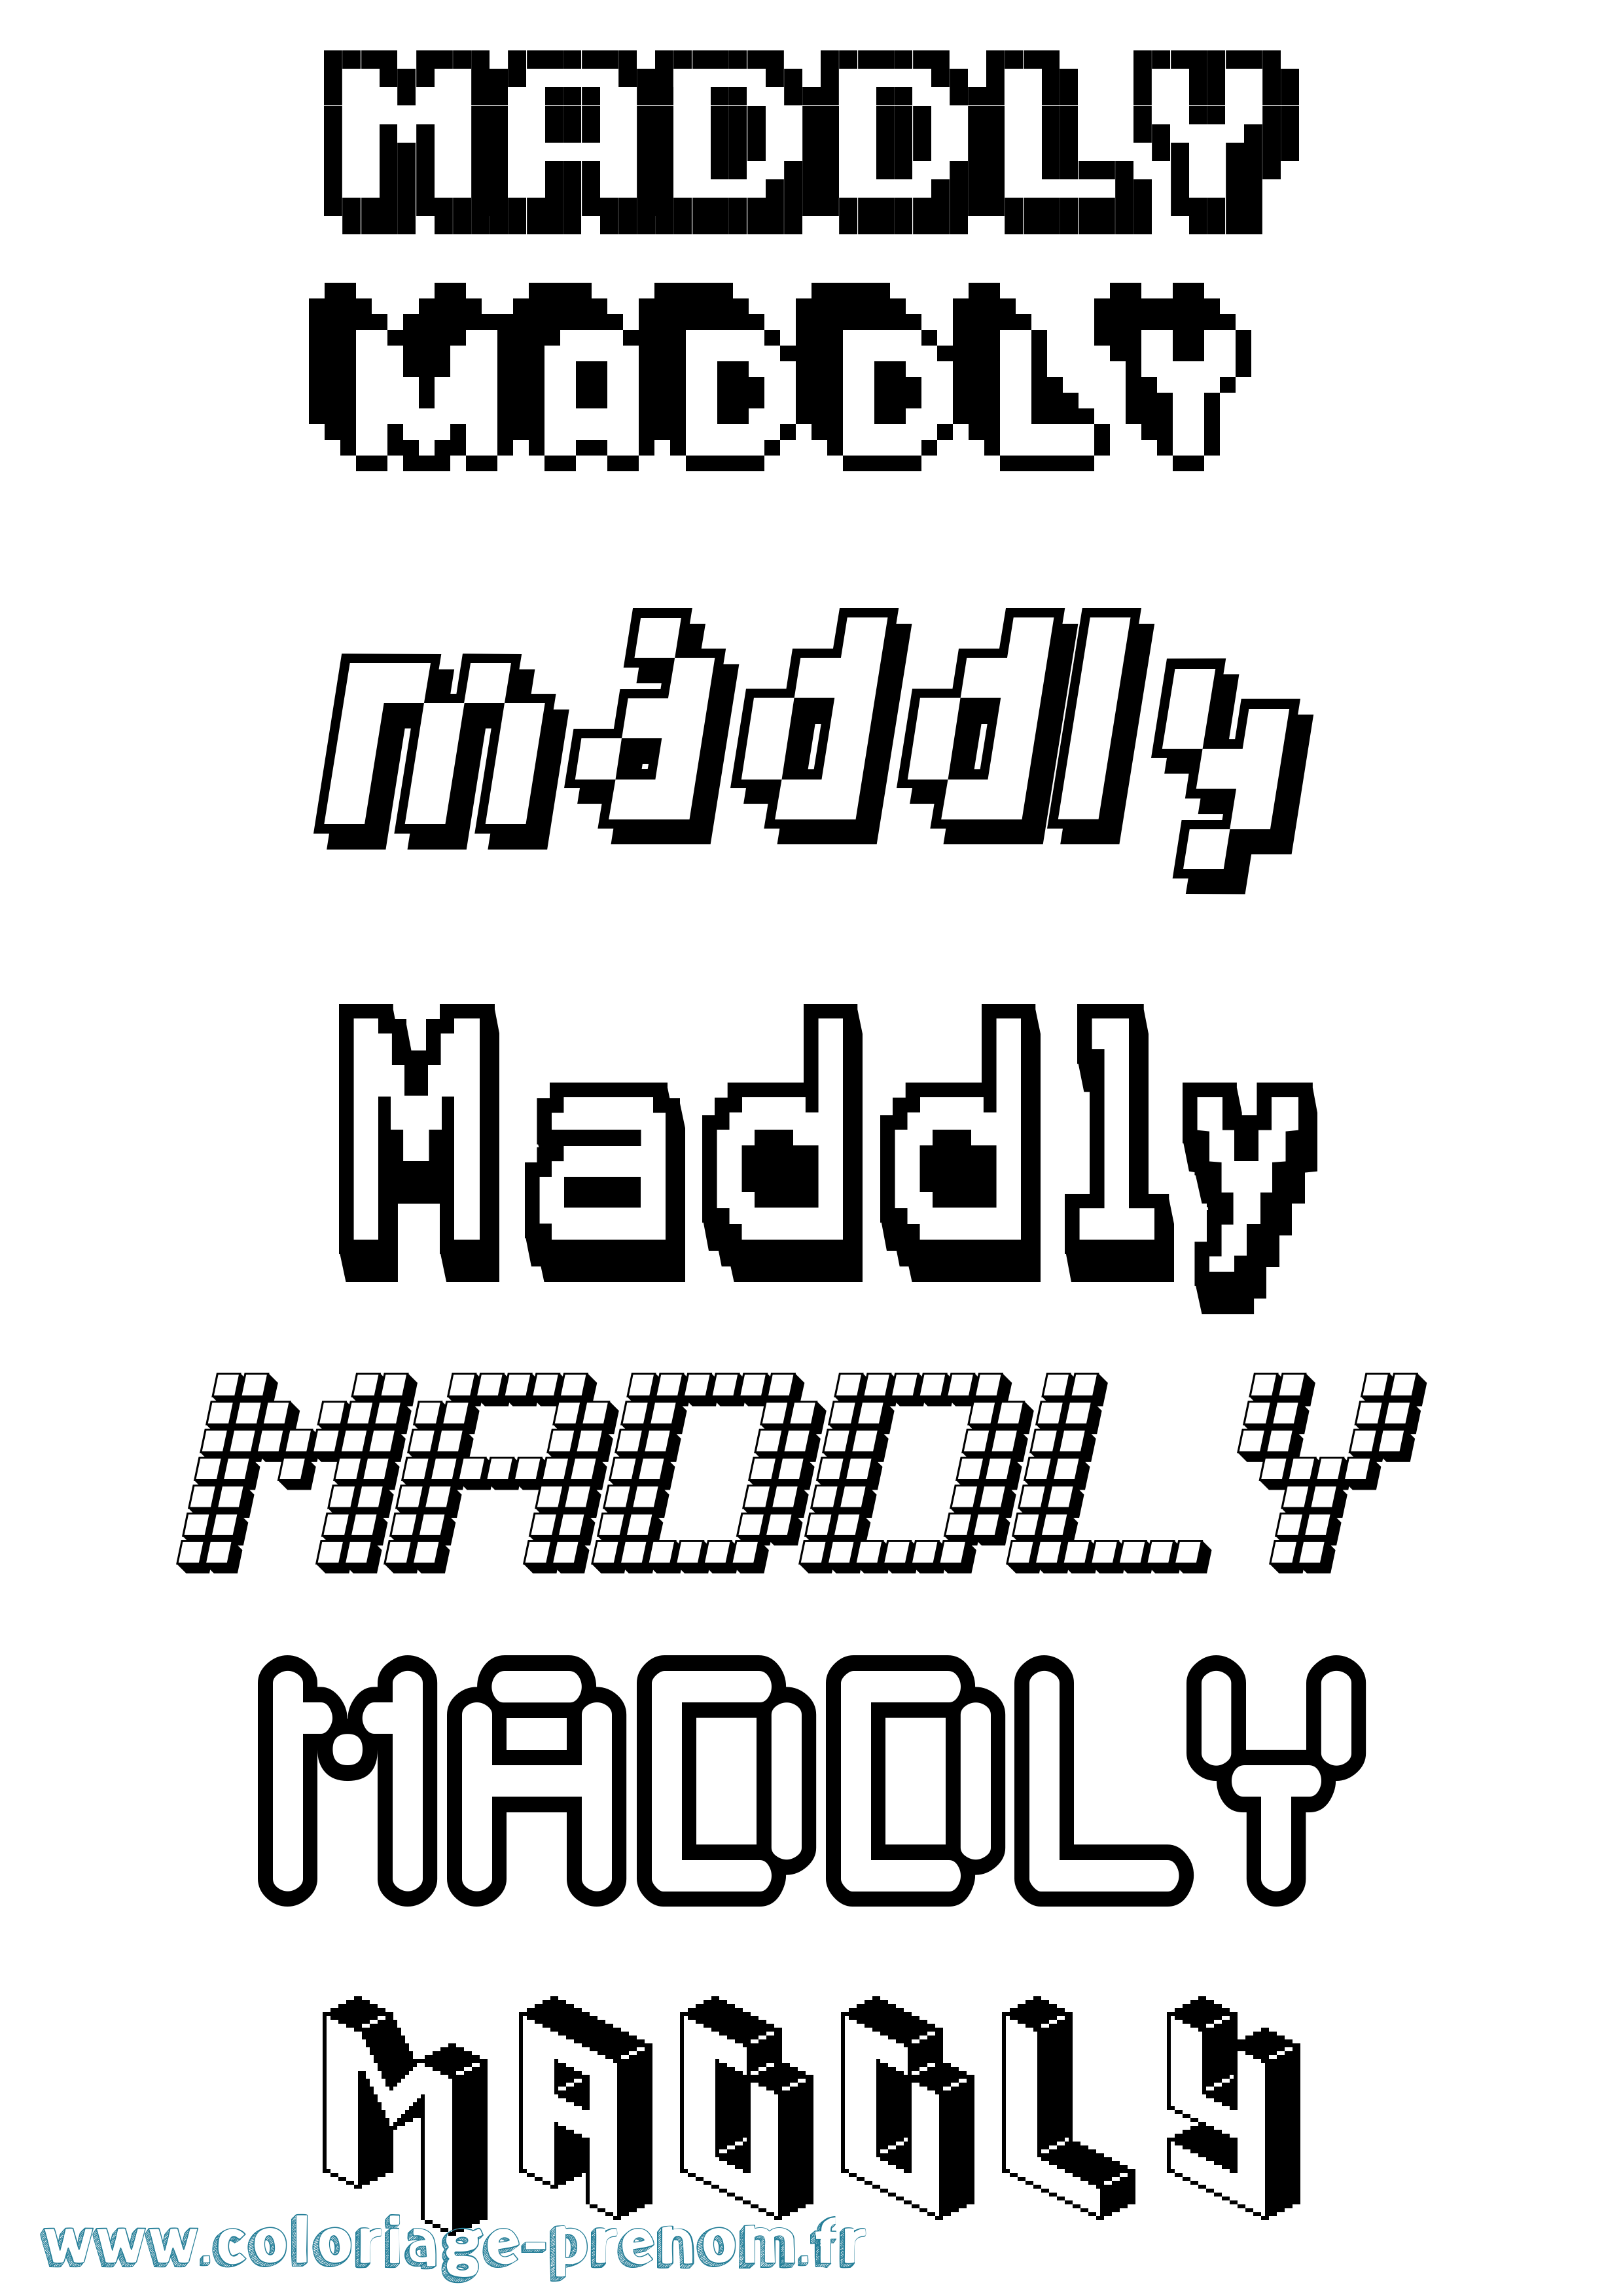 Coloriage prénom Maddly Pixel